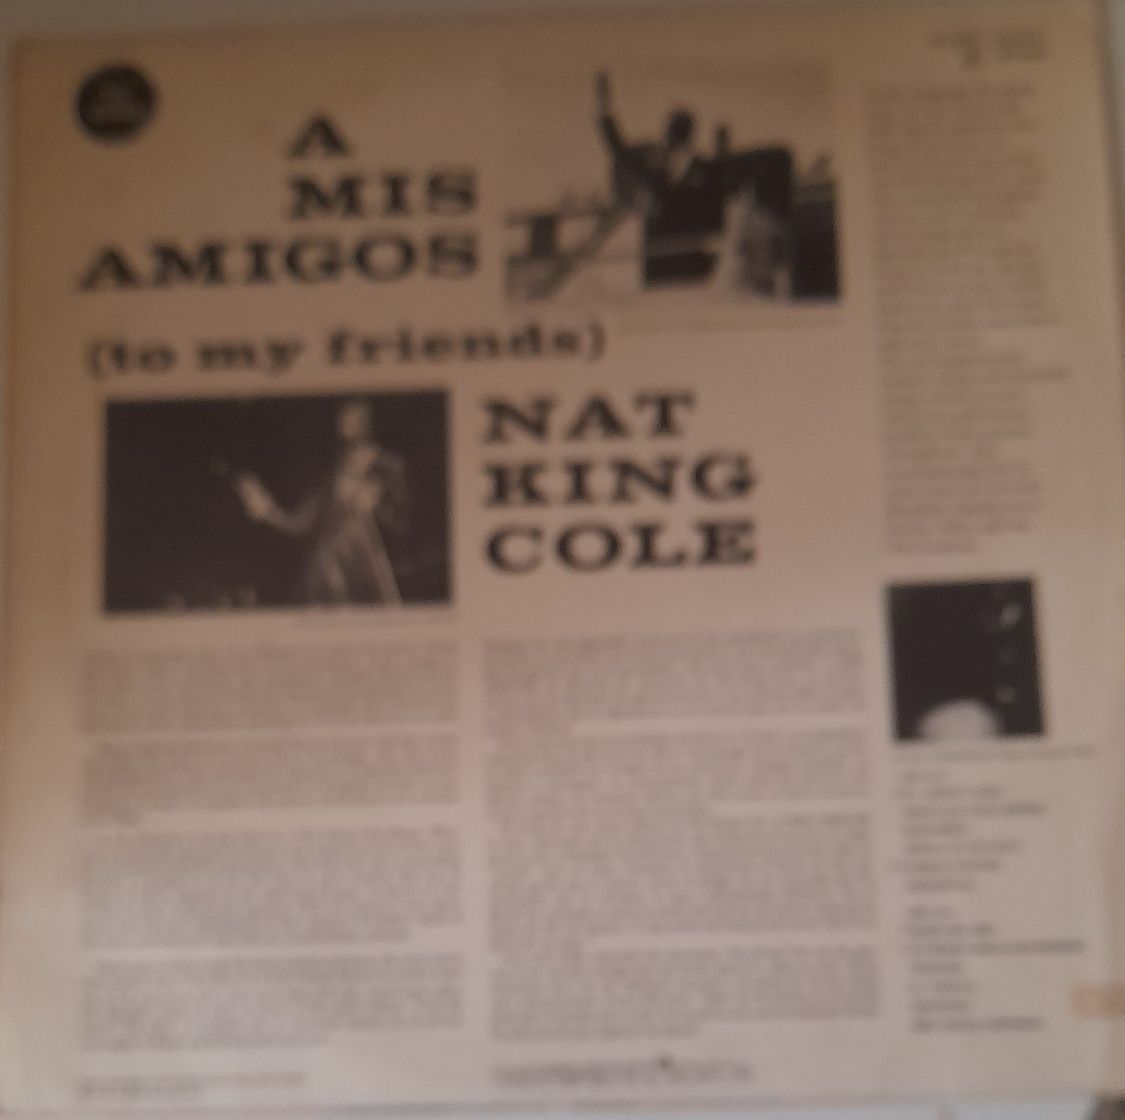 Lp Net King Cole - A mis amigos - 1974